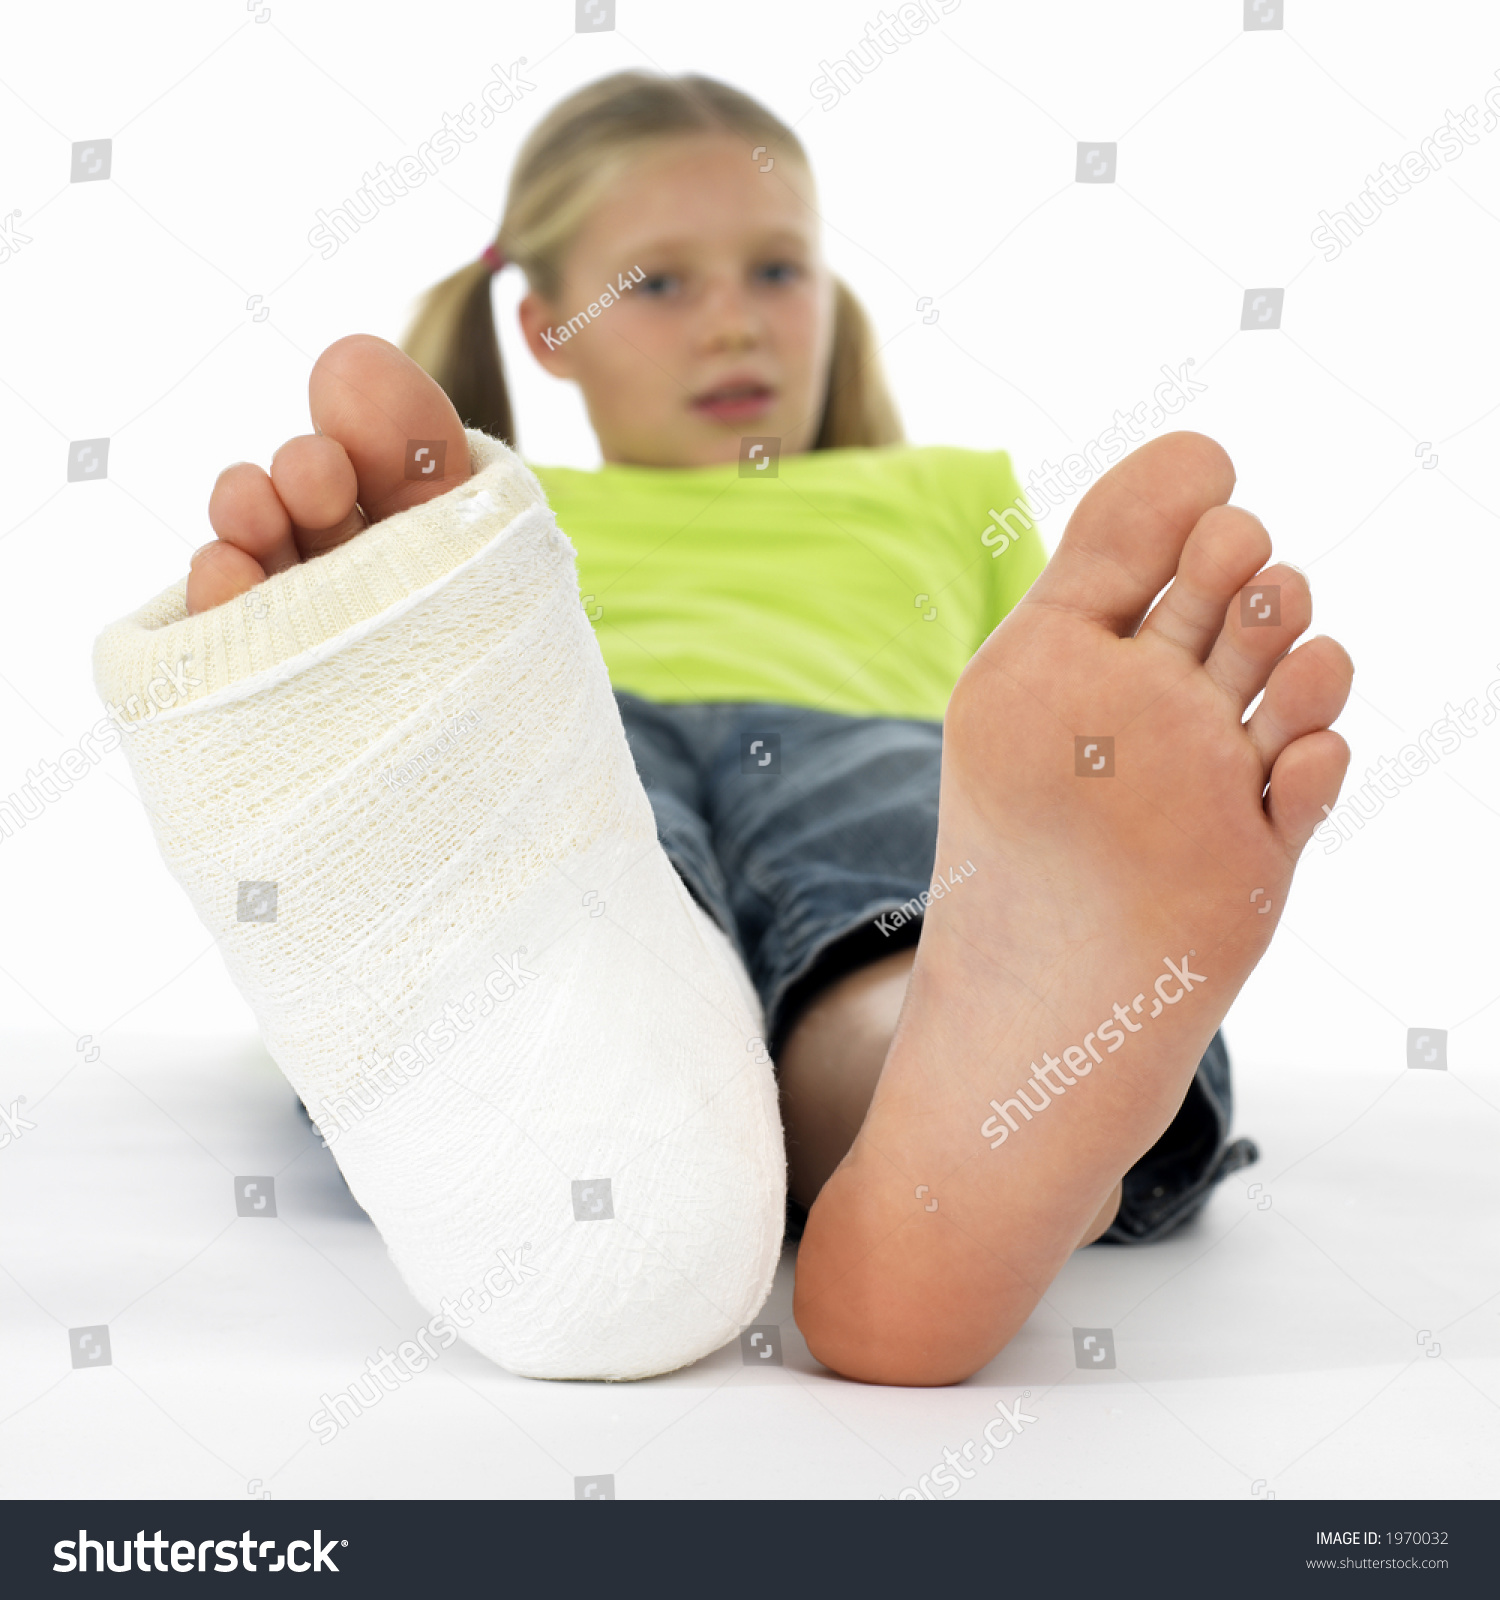 Girl Broken Leg Closeup Feet One Stock Photo 1970032